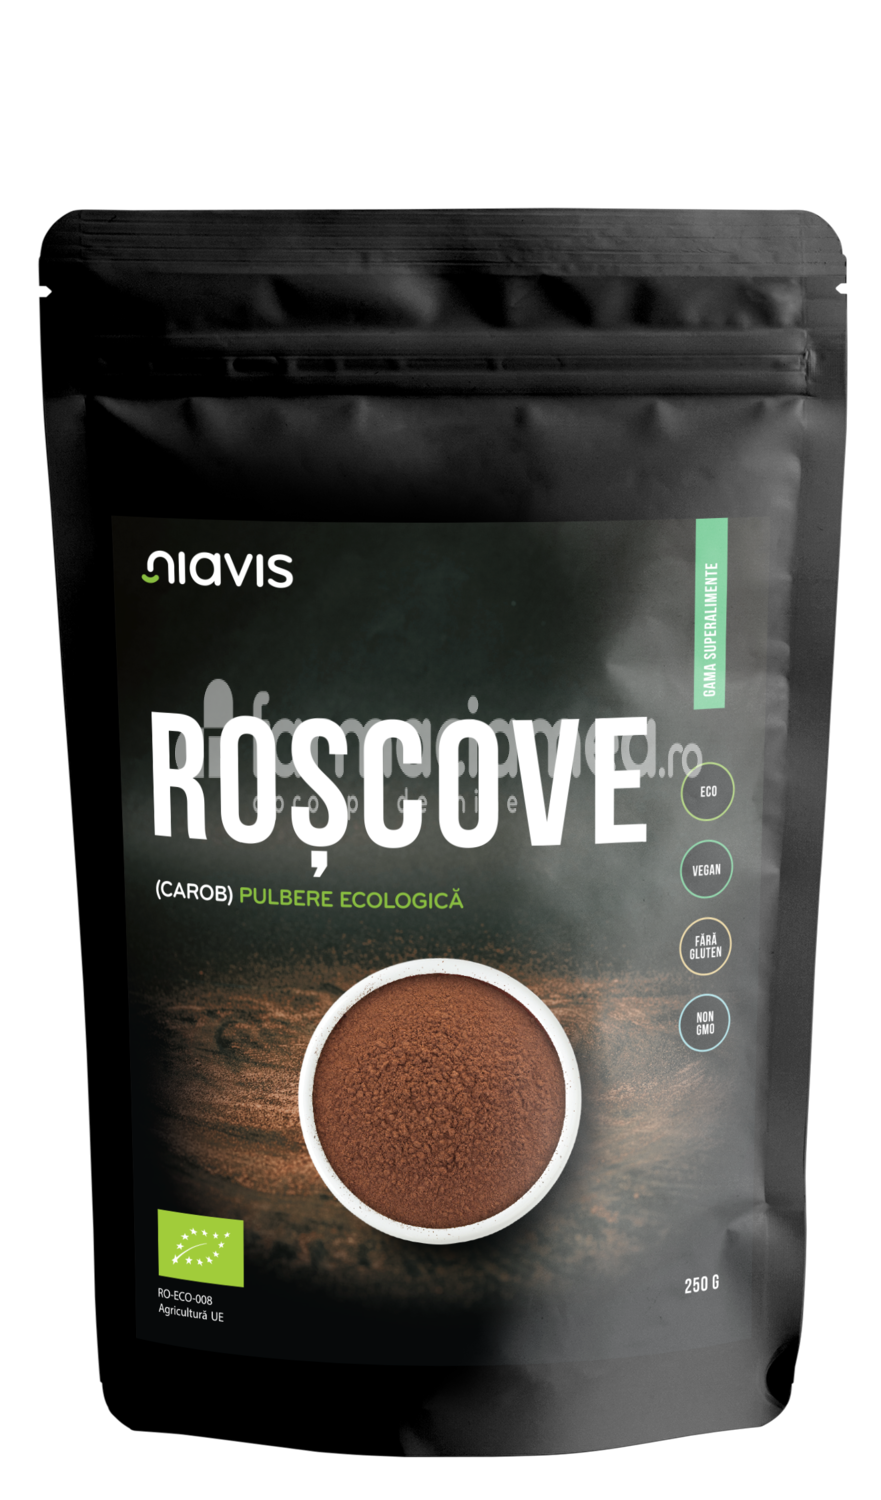 Alimente și băuturi - Niavis Roscove (carob) pulbere ecologica Bio, 250 g, farmaciamea.ro